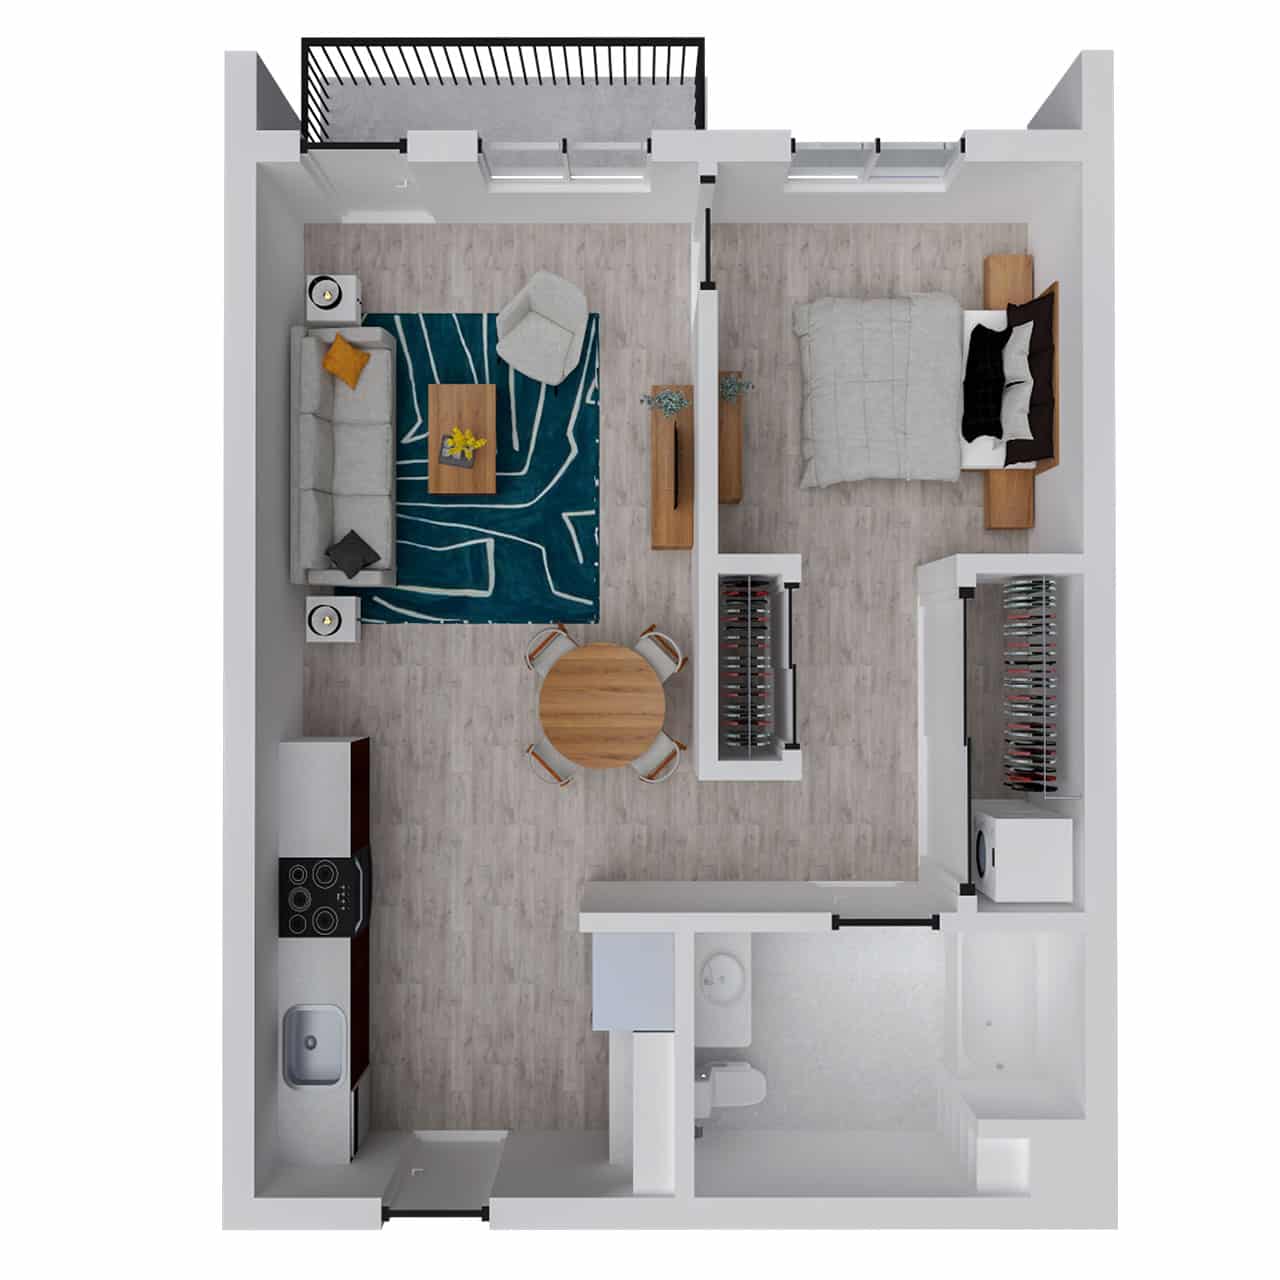 Attwell, A5 floor plan, one bedroom, one bath.